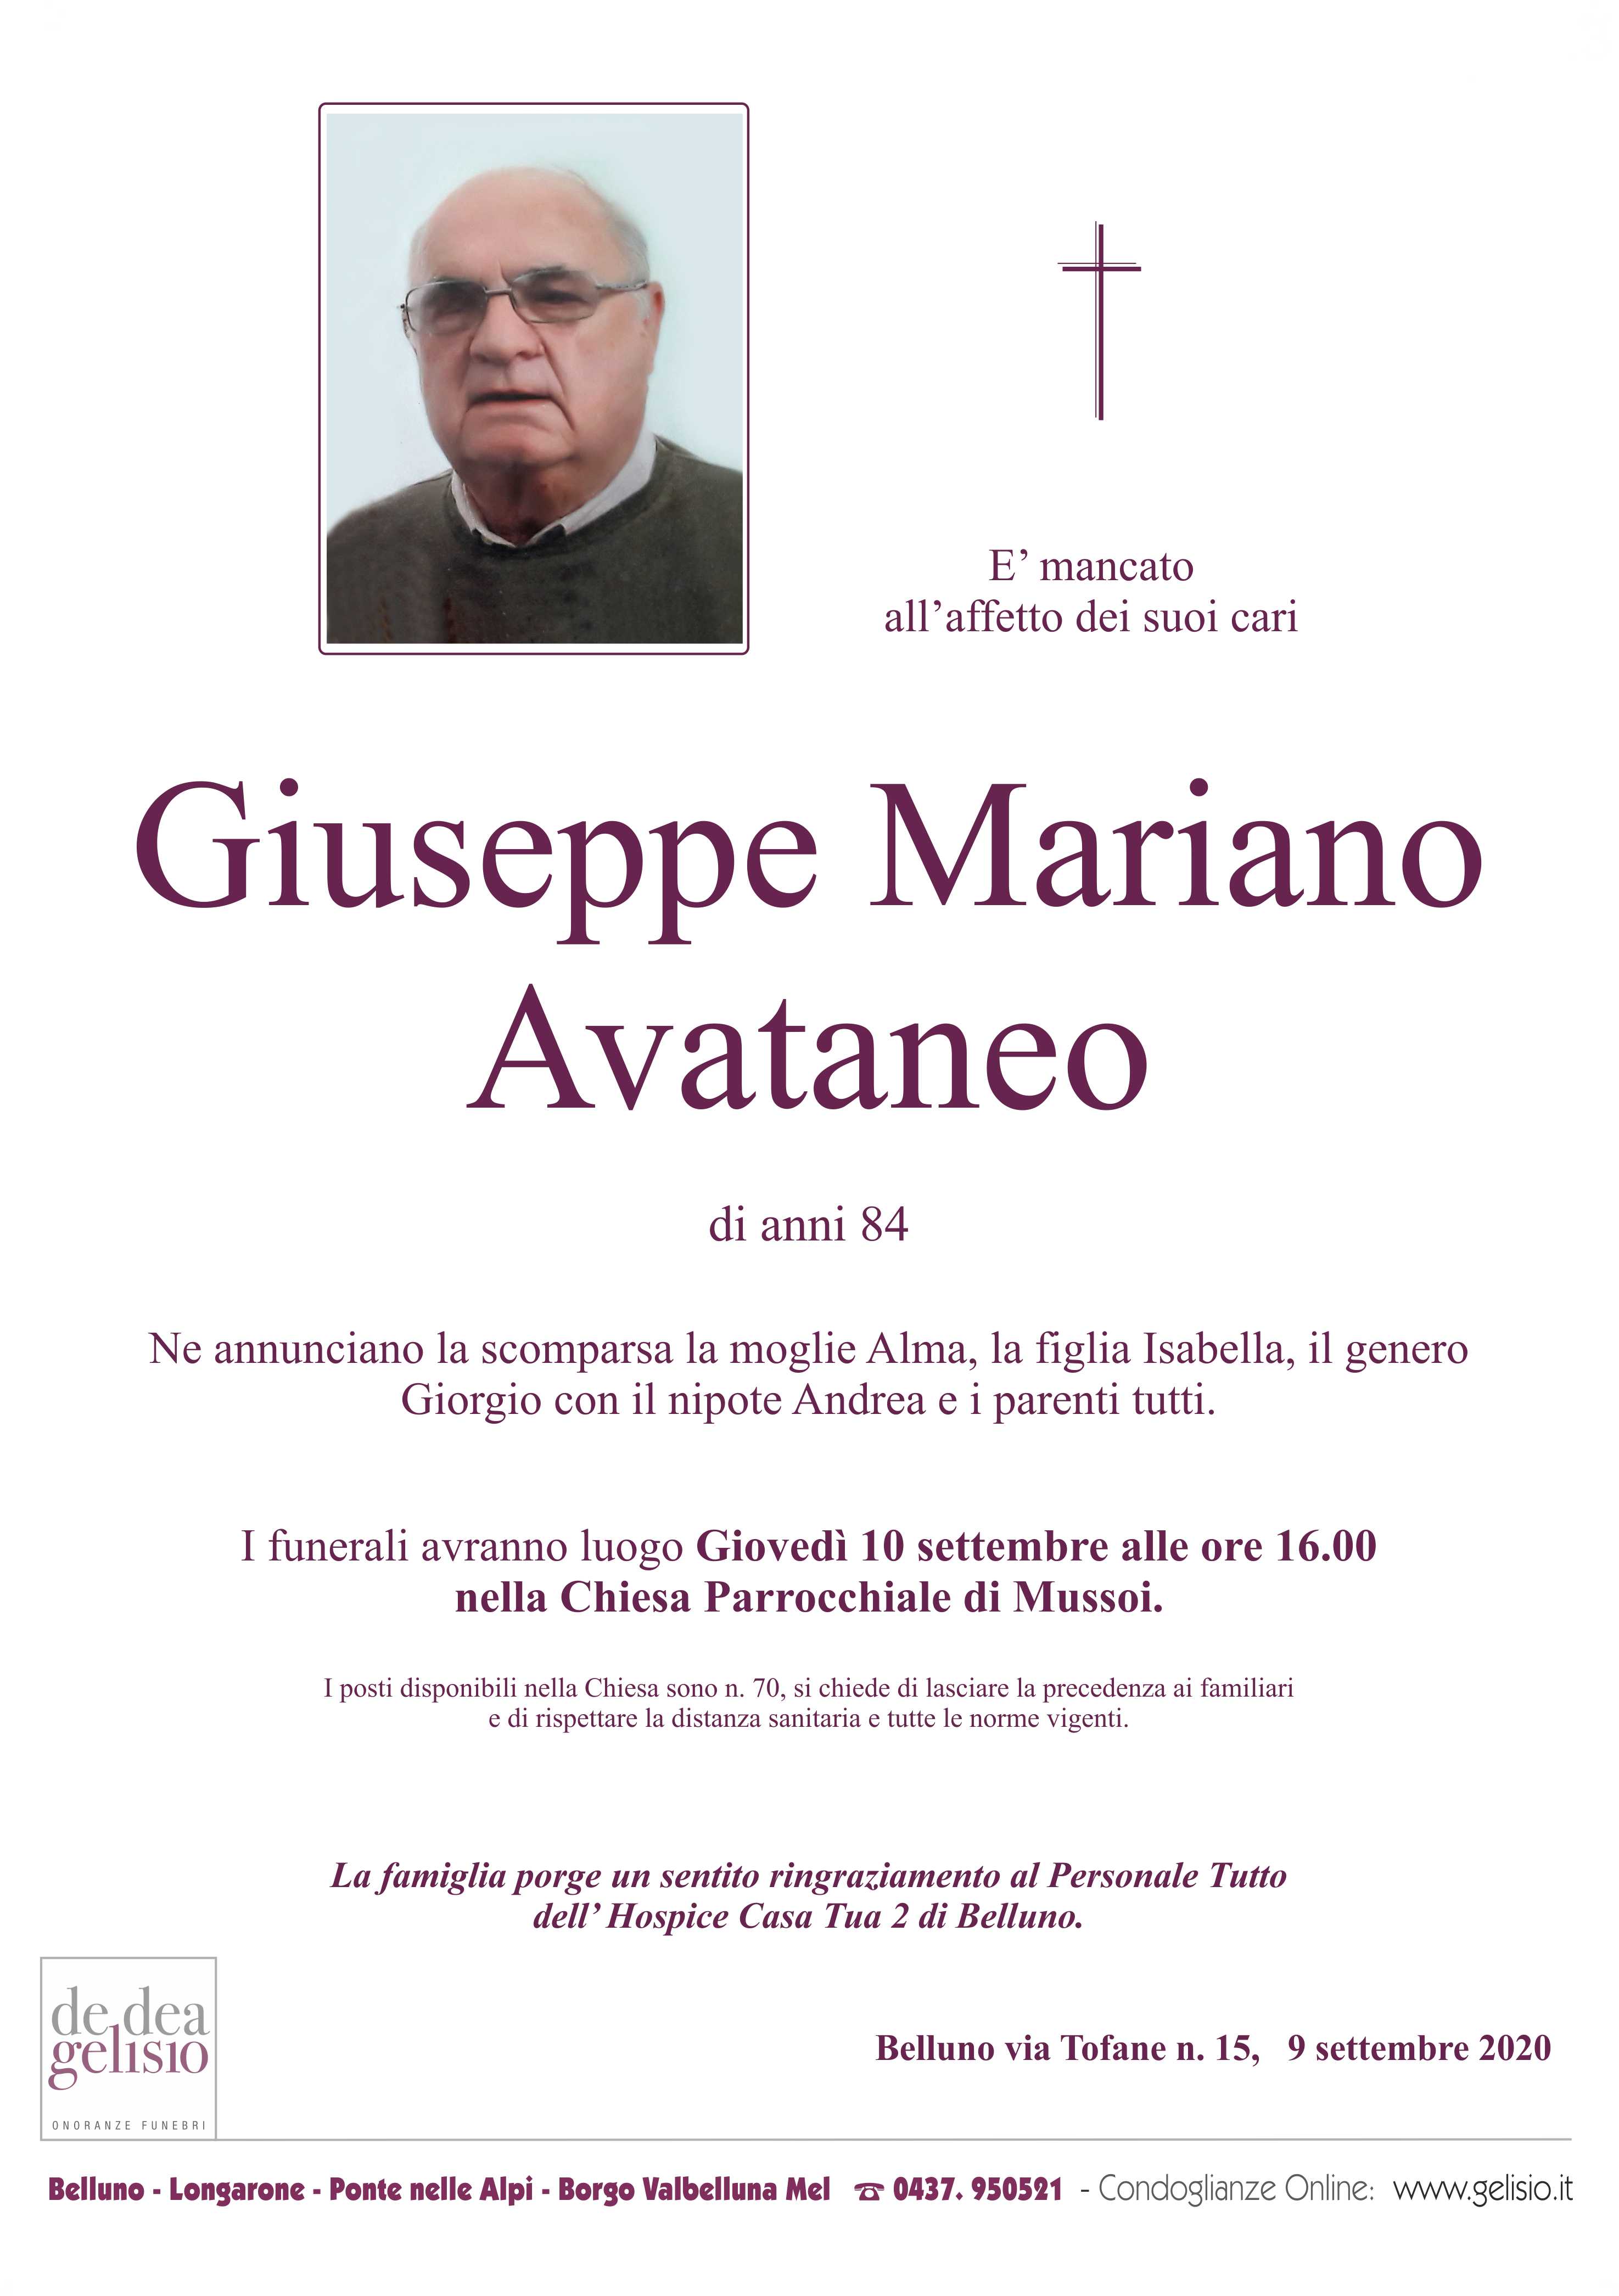 Avataneo Giuseppe Mariano